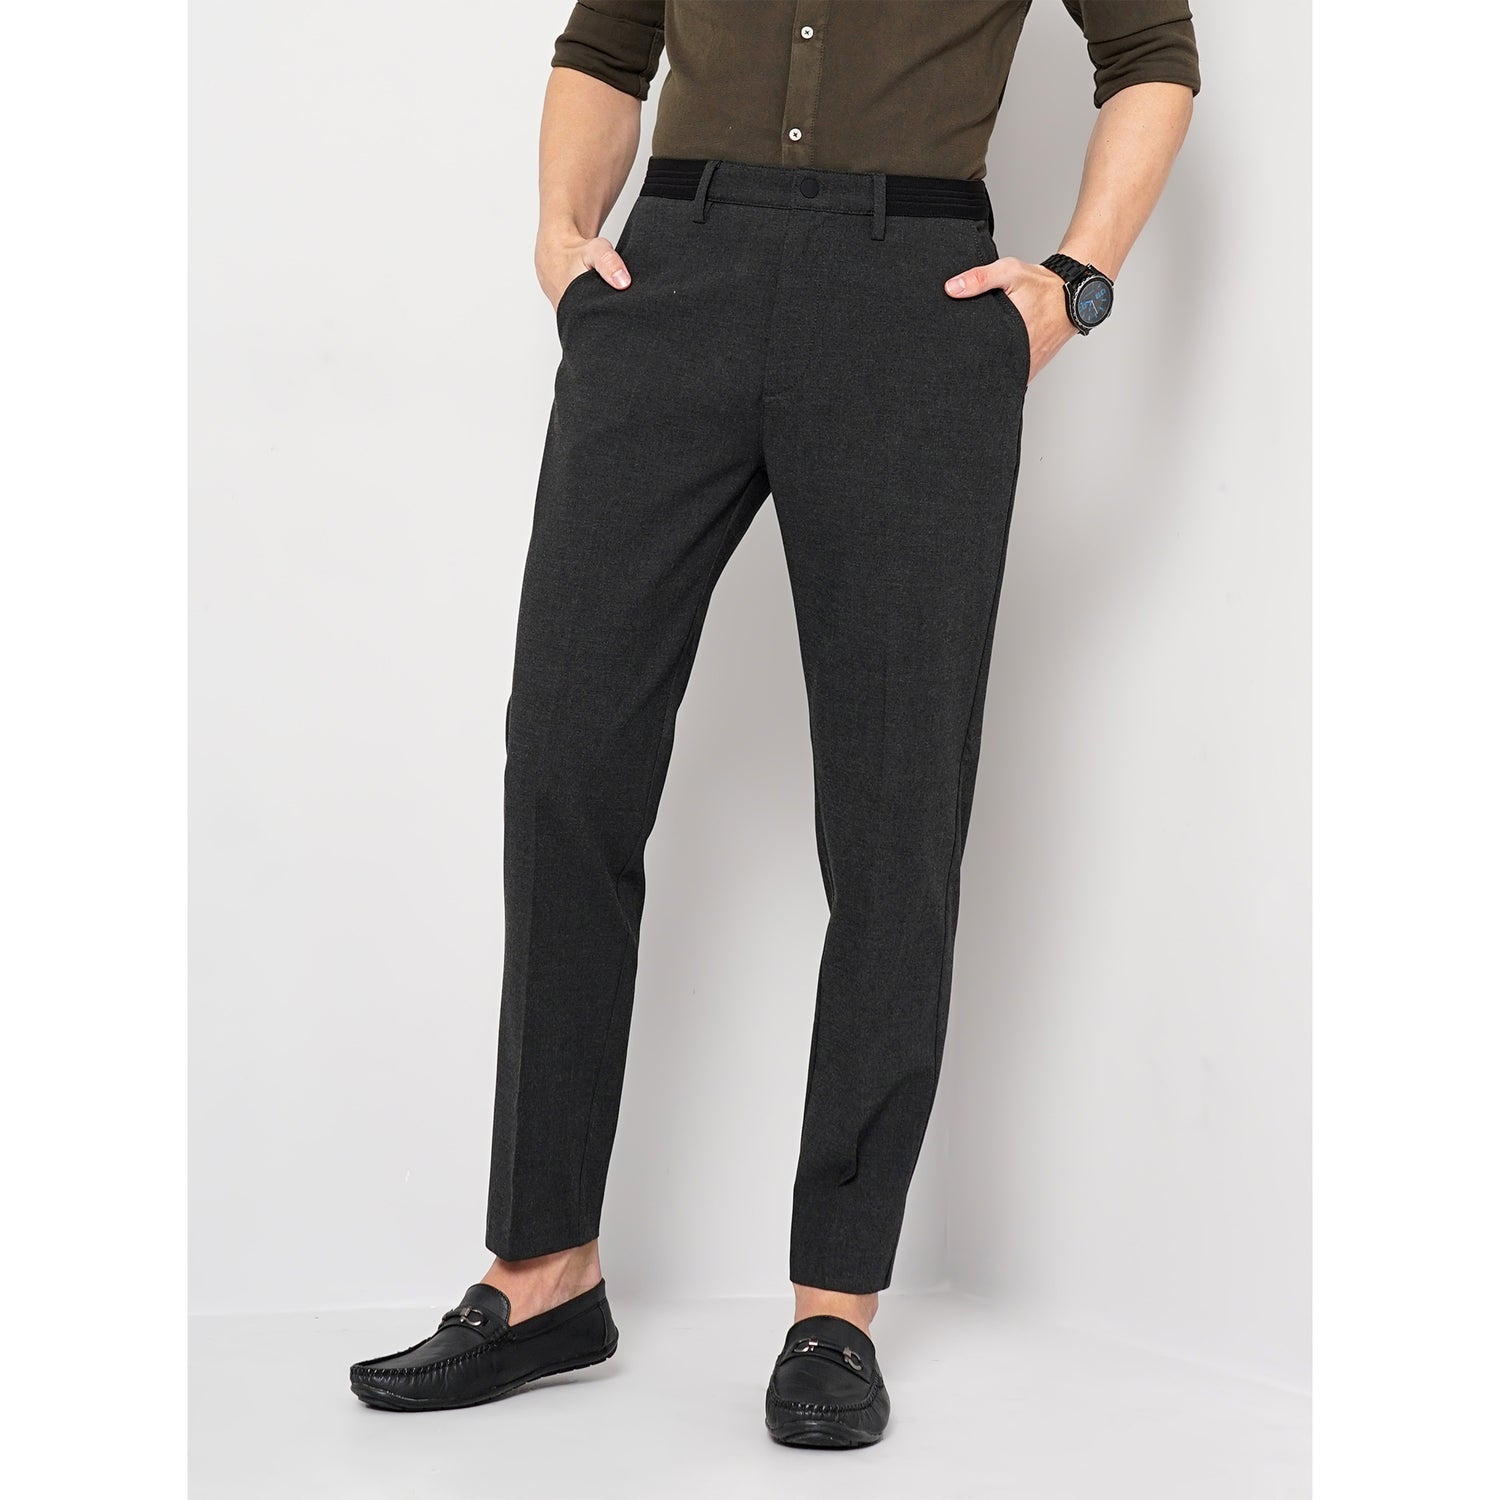 Black Polyester Fashion Pant Trousers